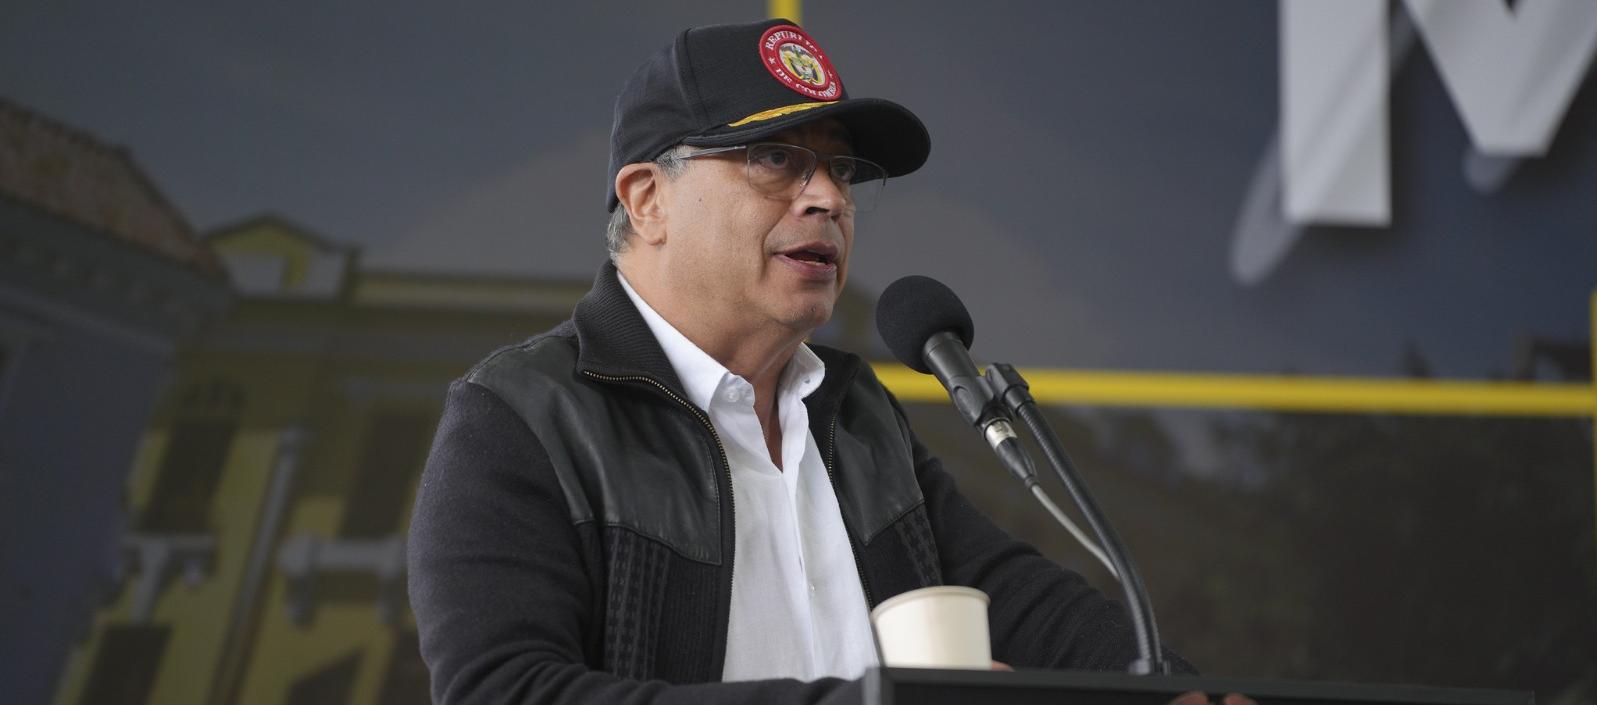 Gustavo Petro, Presidente de Colombia